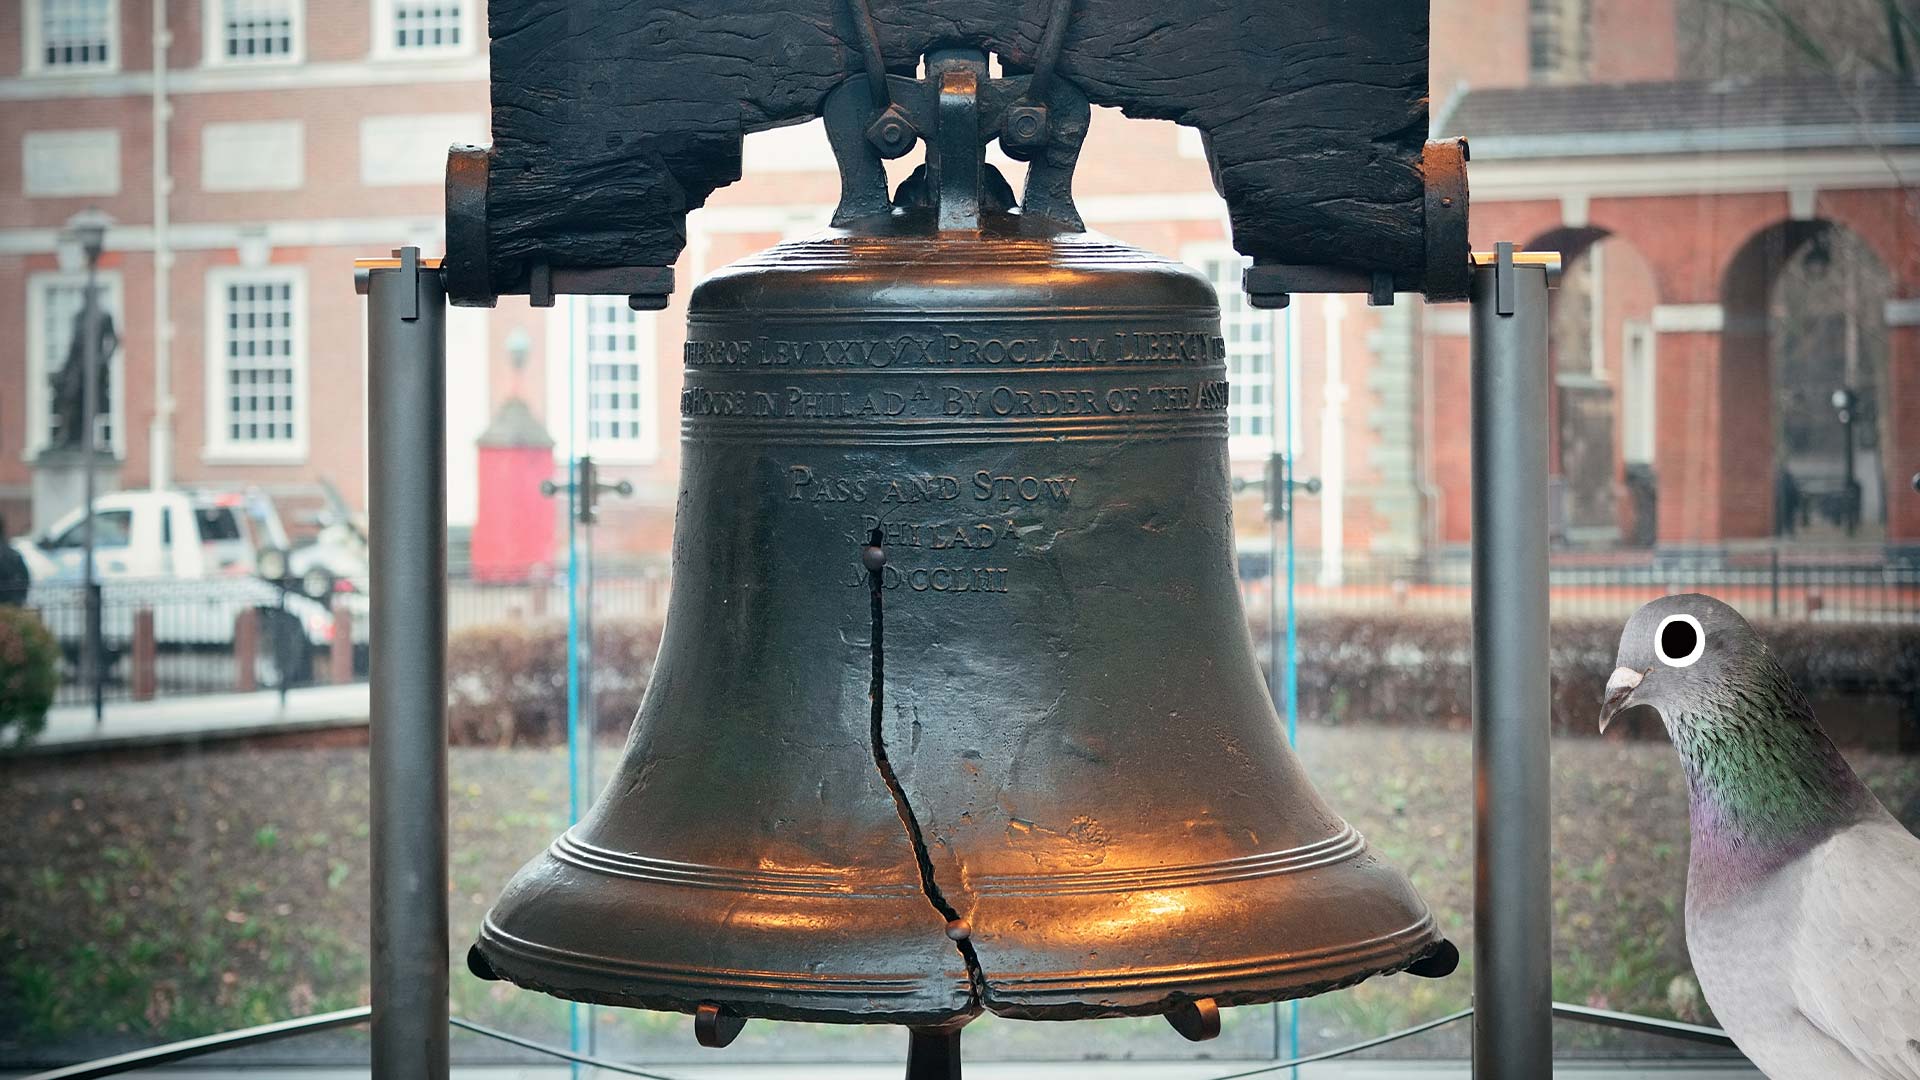 Philadelphia's Liberty Bell